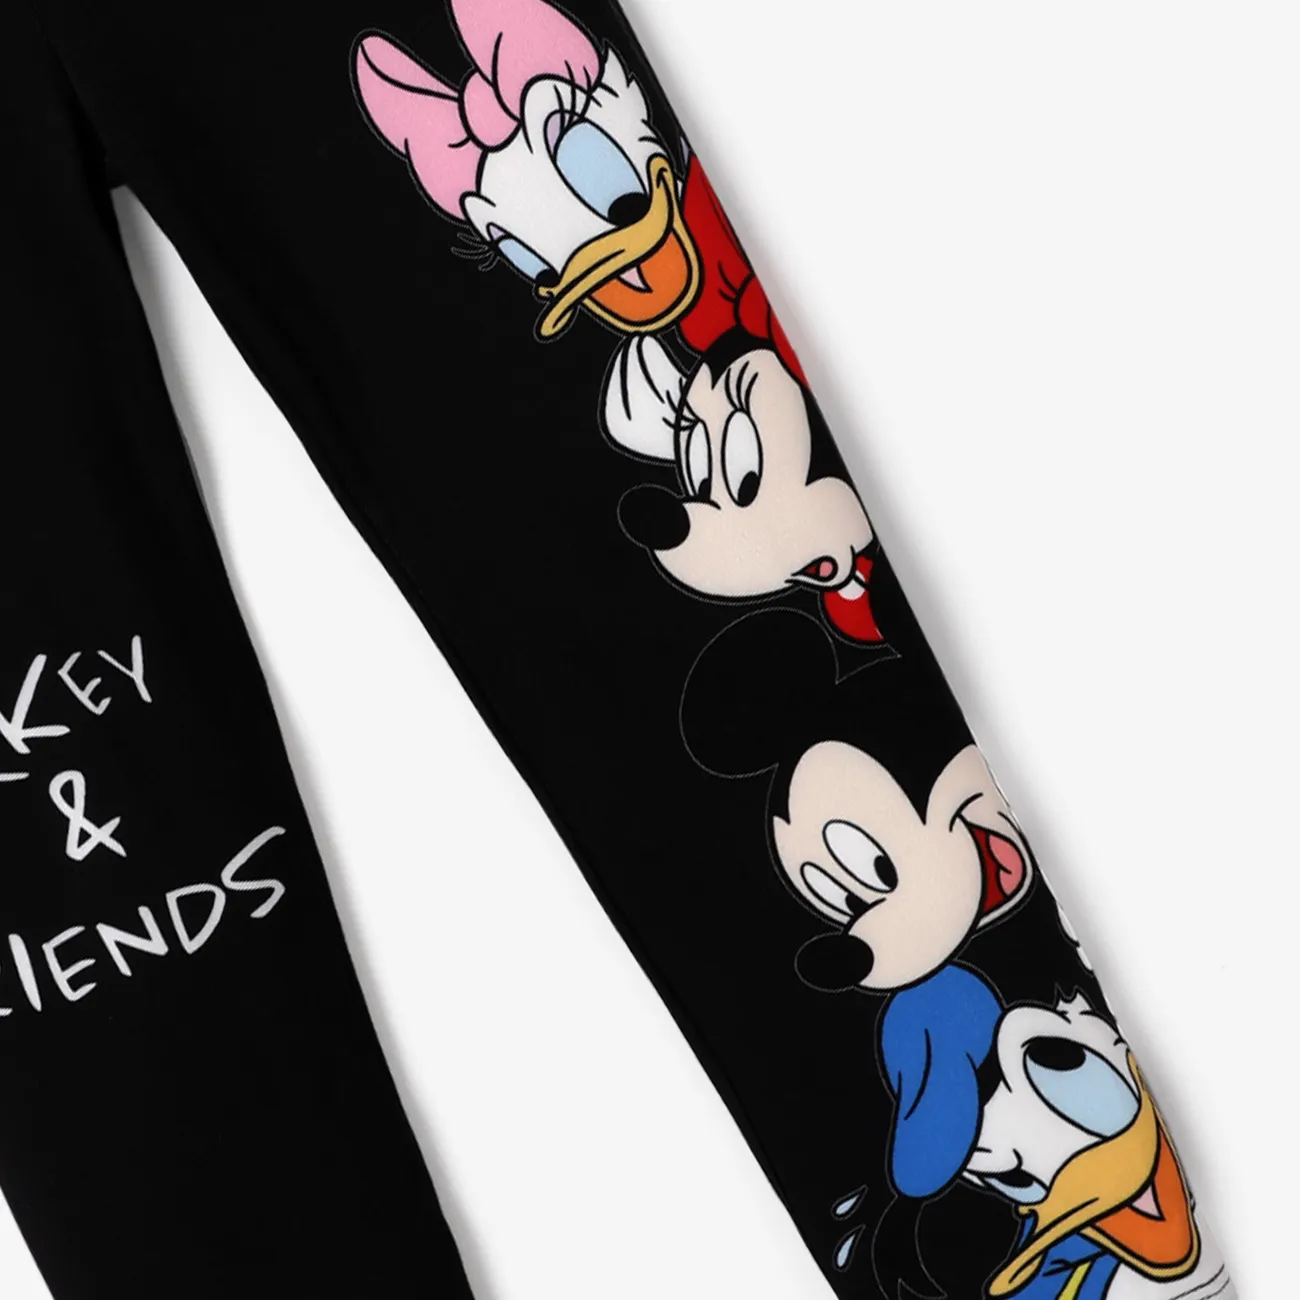 Disney Mickey and Friends طماق & سروال & سروال التمهيد 2 - 6 سنوات حريمي شخصيات أسود big image 1